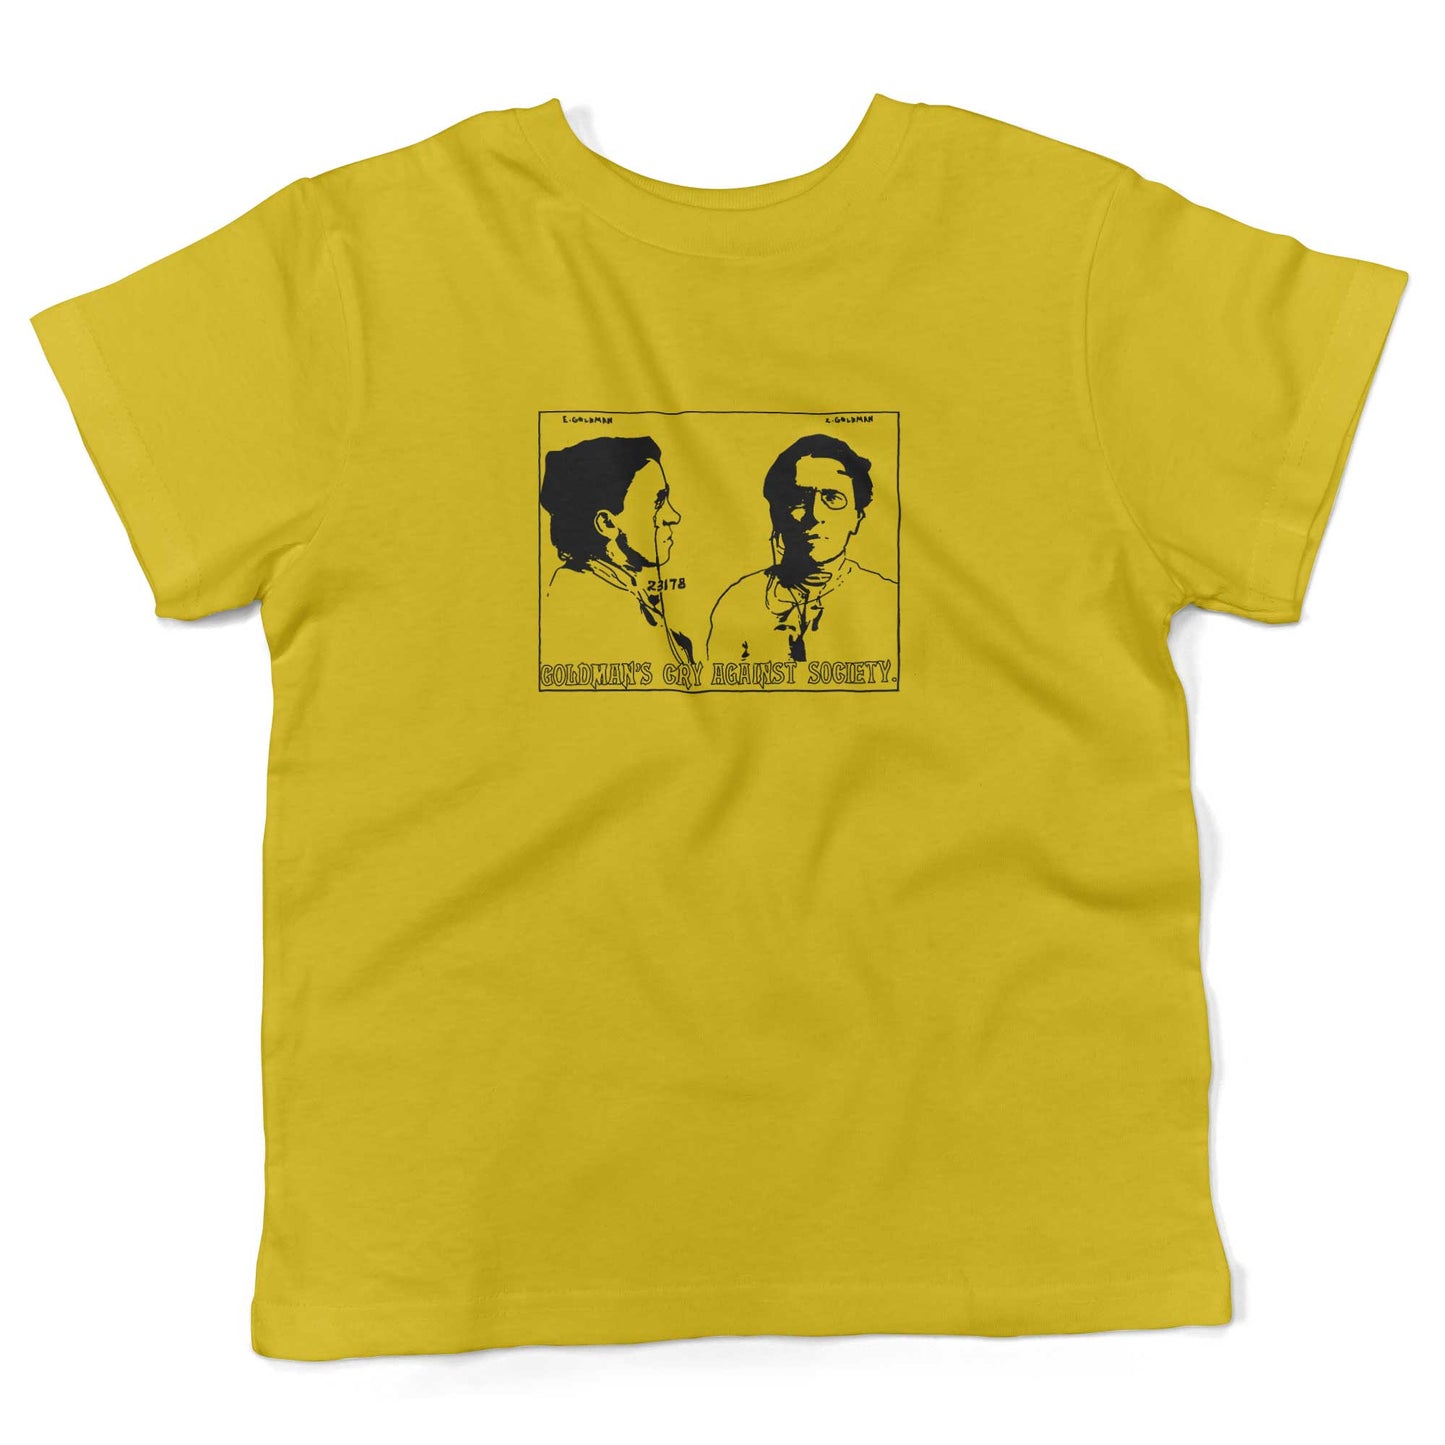 Emma Goldman Toddler Shirt-Sunshine Yellow-2T